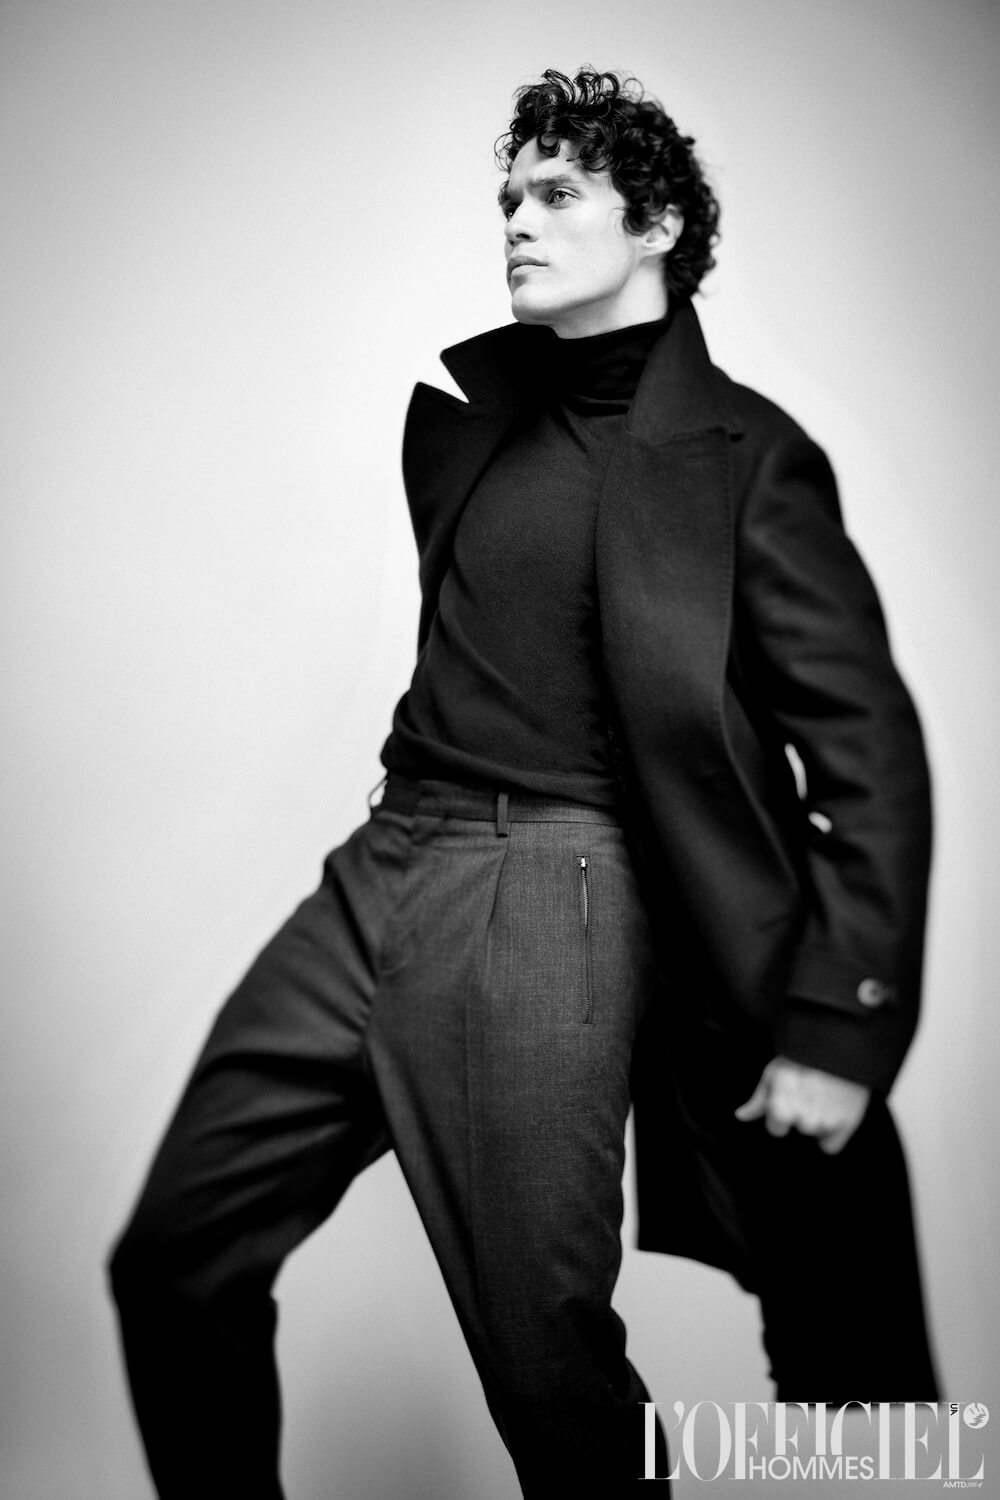 Штани Karl Lagerfeld, пальто та водолазка — Massimo Dutti 